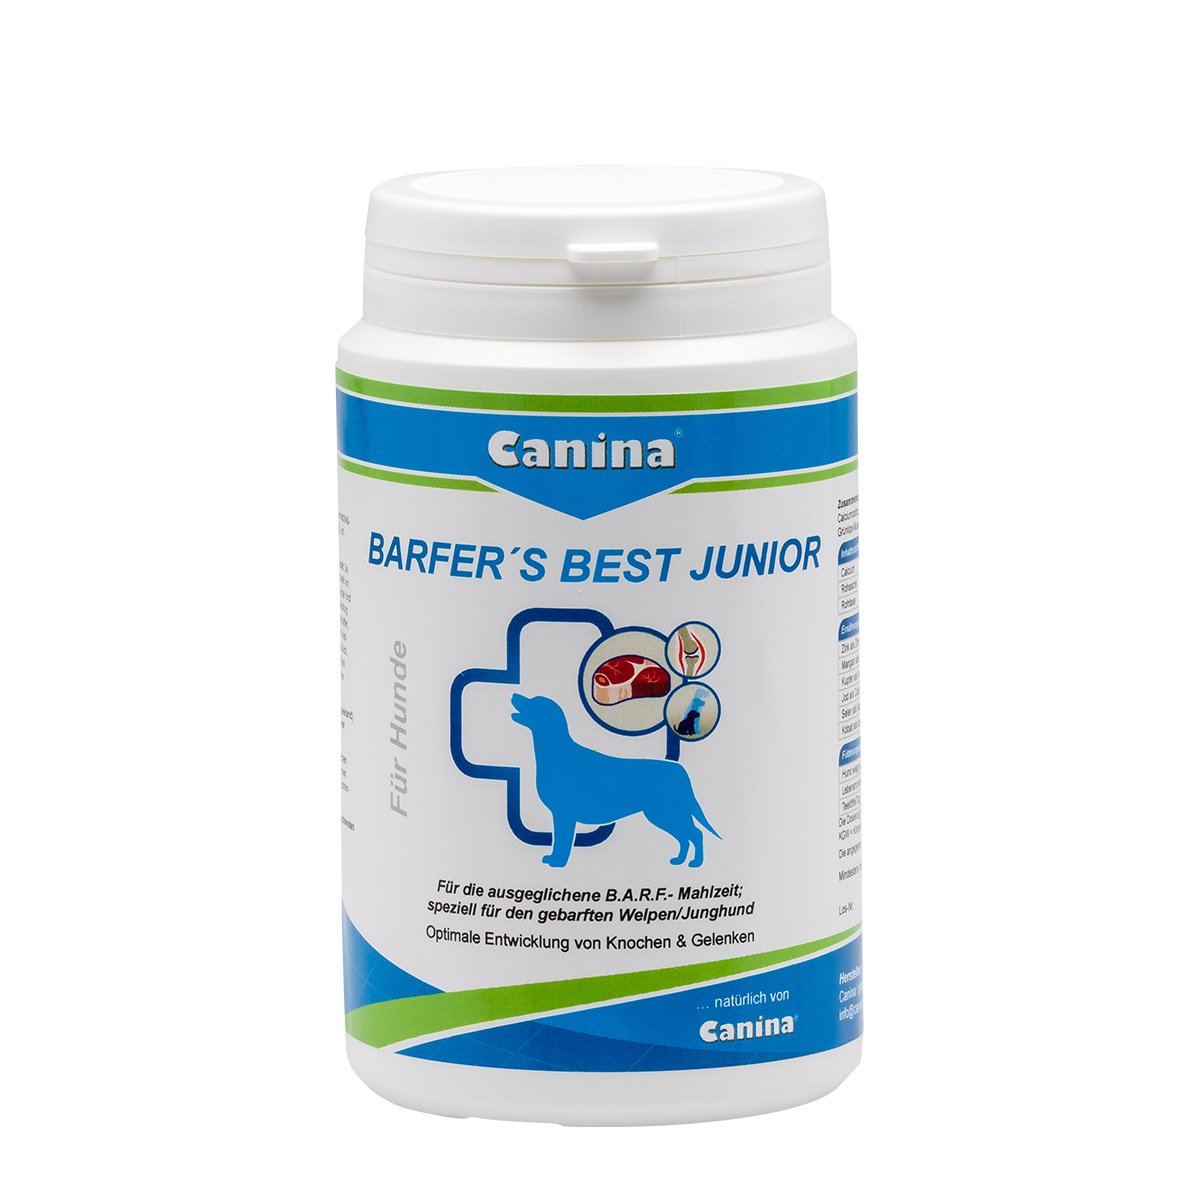 Canina Barfer's Best Junior 350g von Canina Pharma